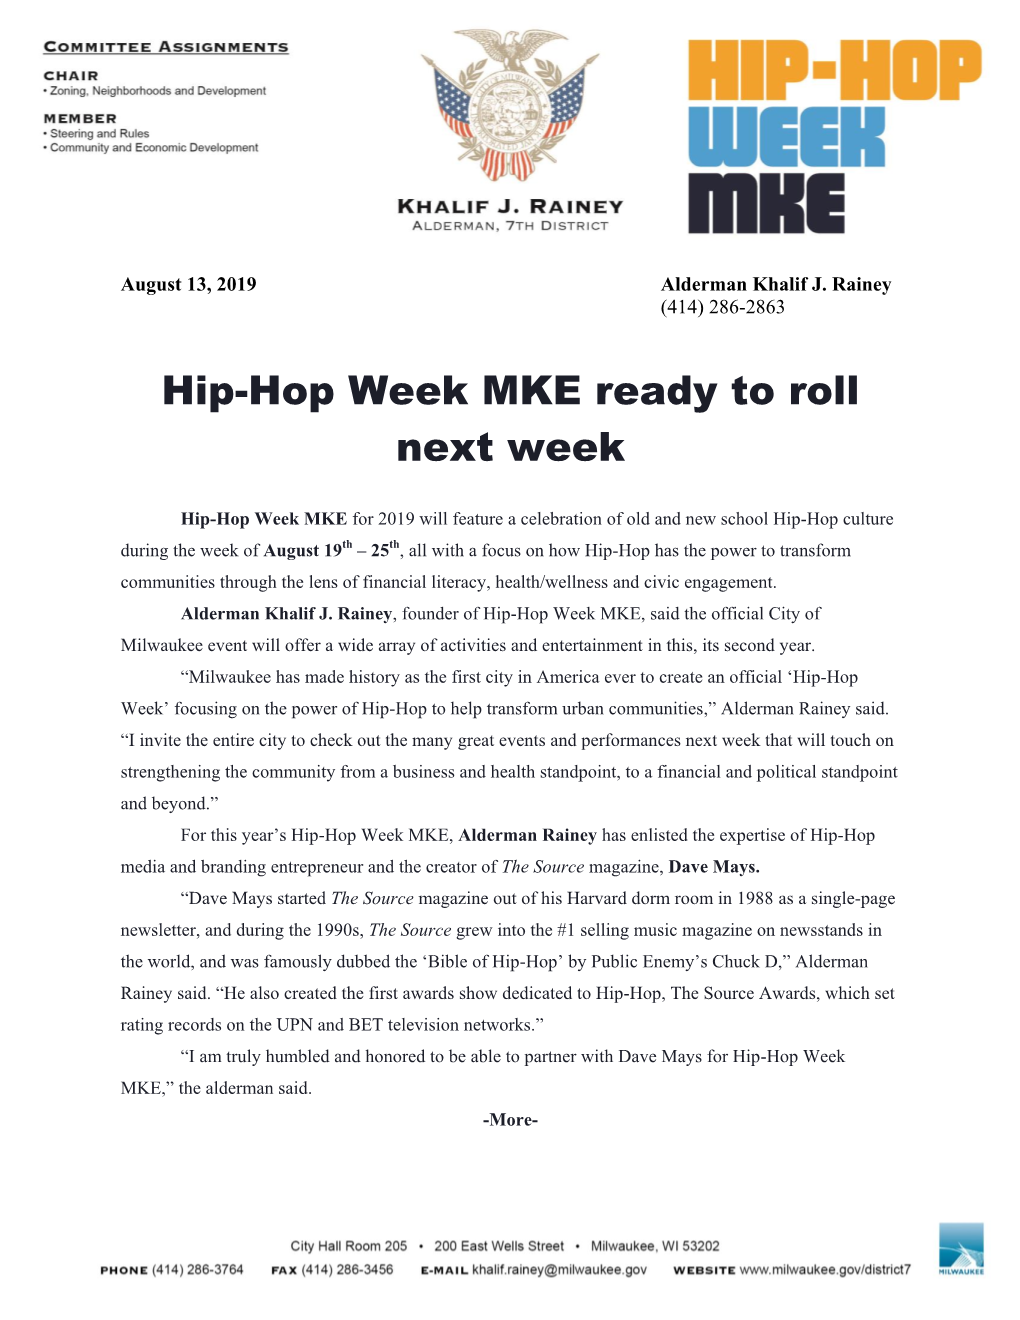 Hip-Hop Week MKE Ready to Roll Next Week